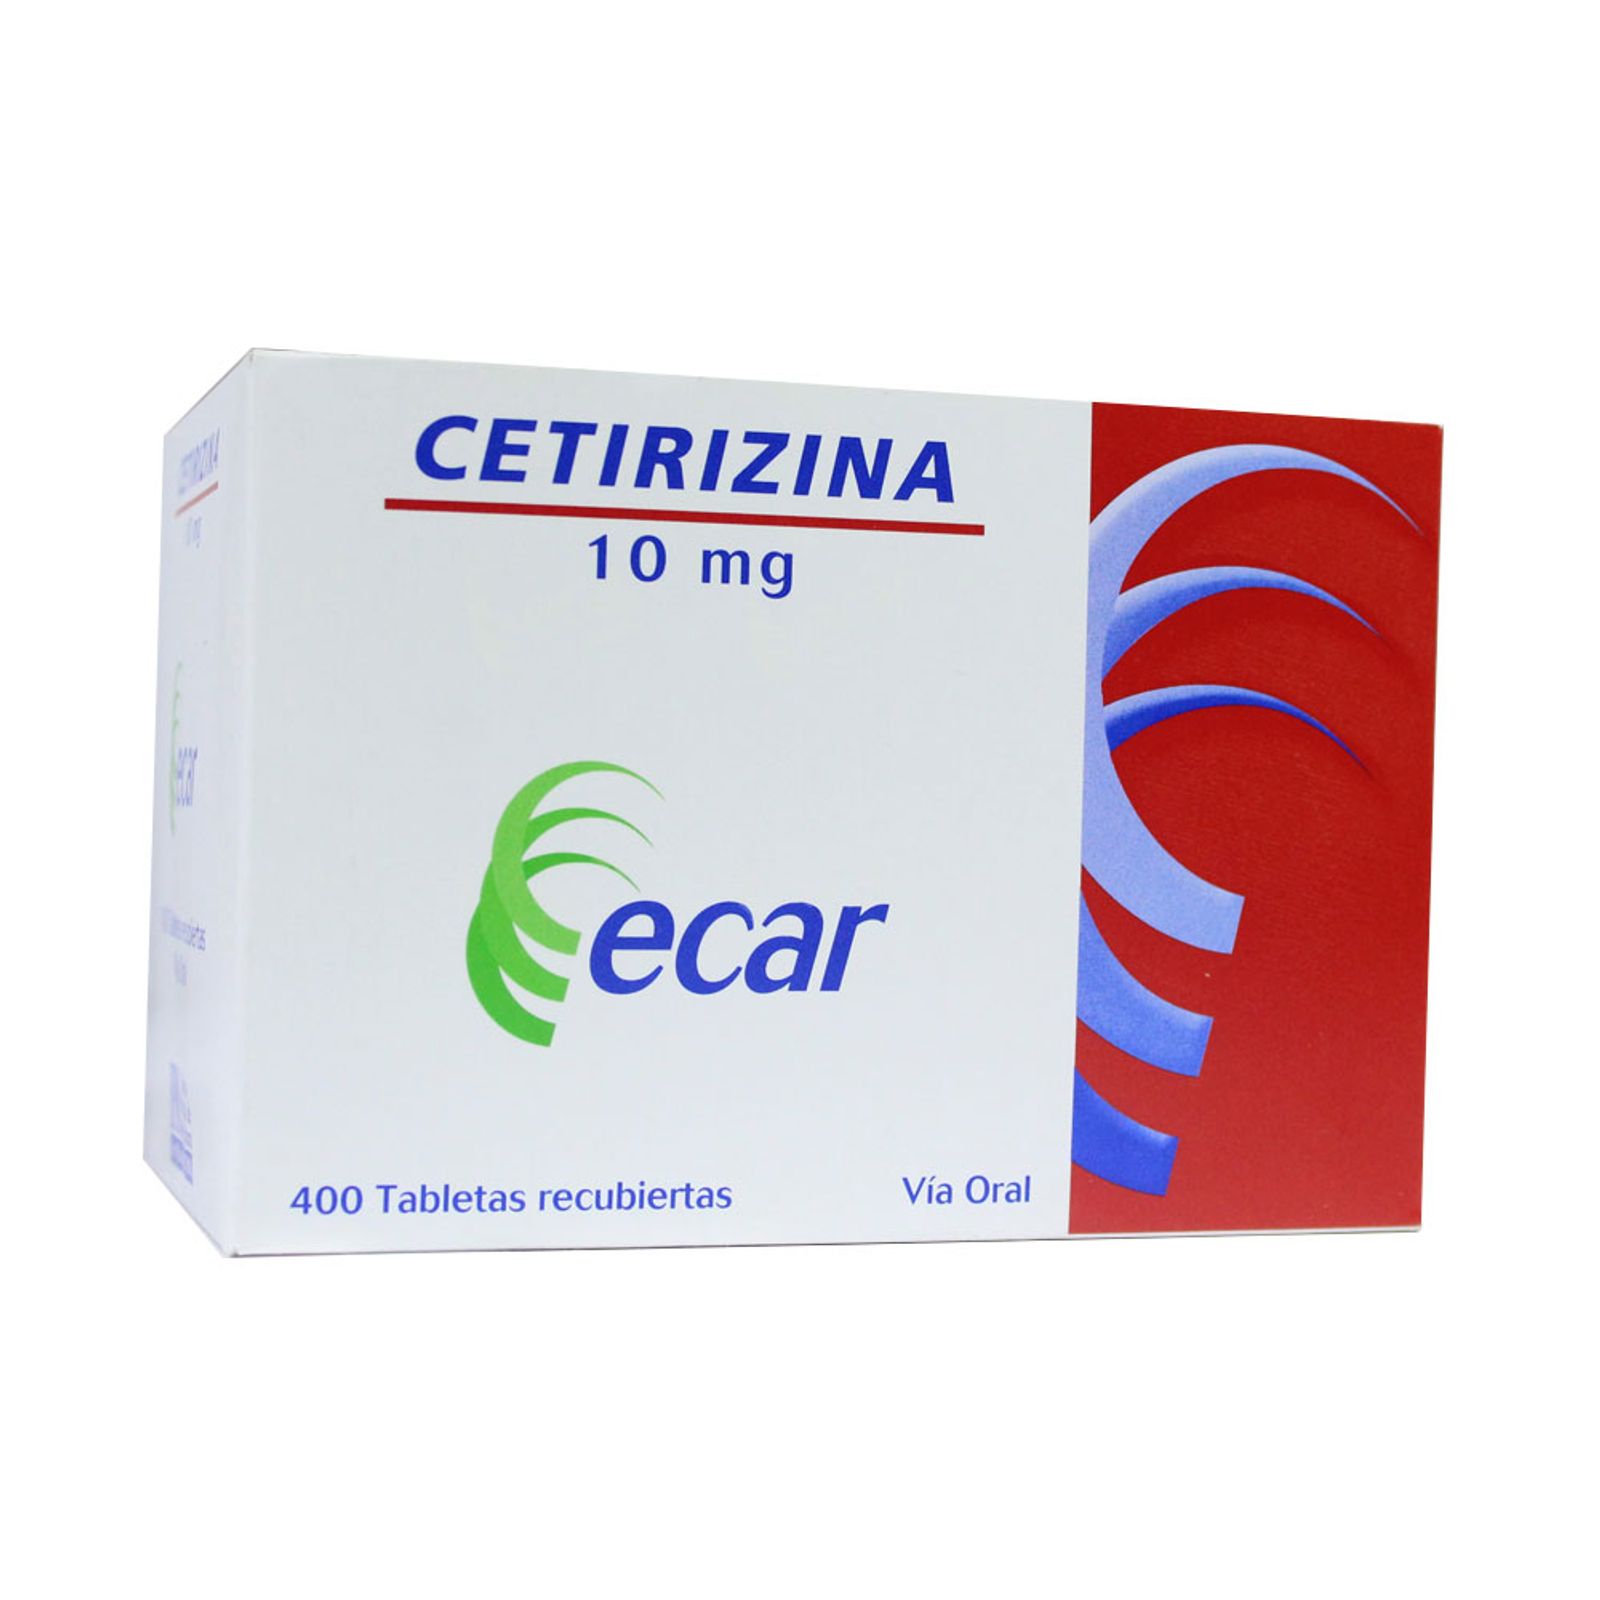 Cetirizina 10 Mg Ecar Caja De 400 Tabletas